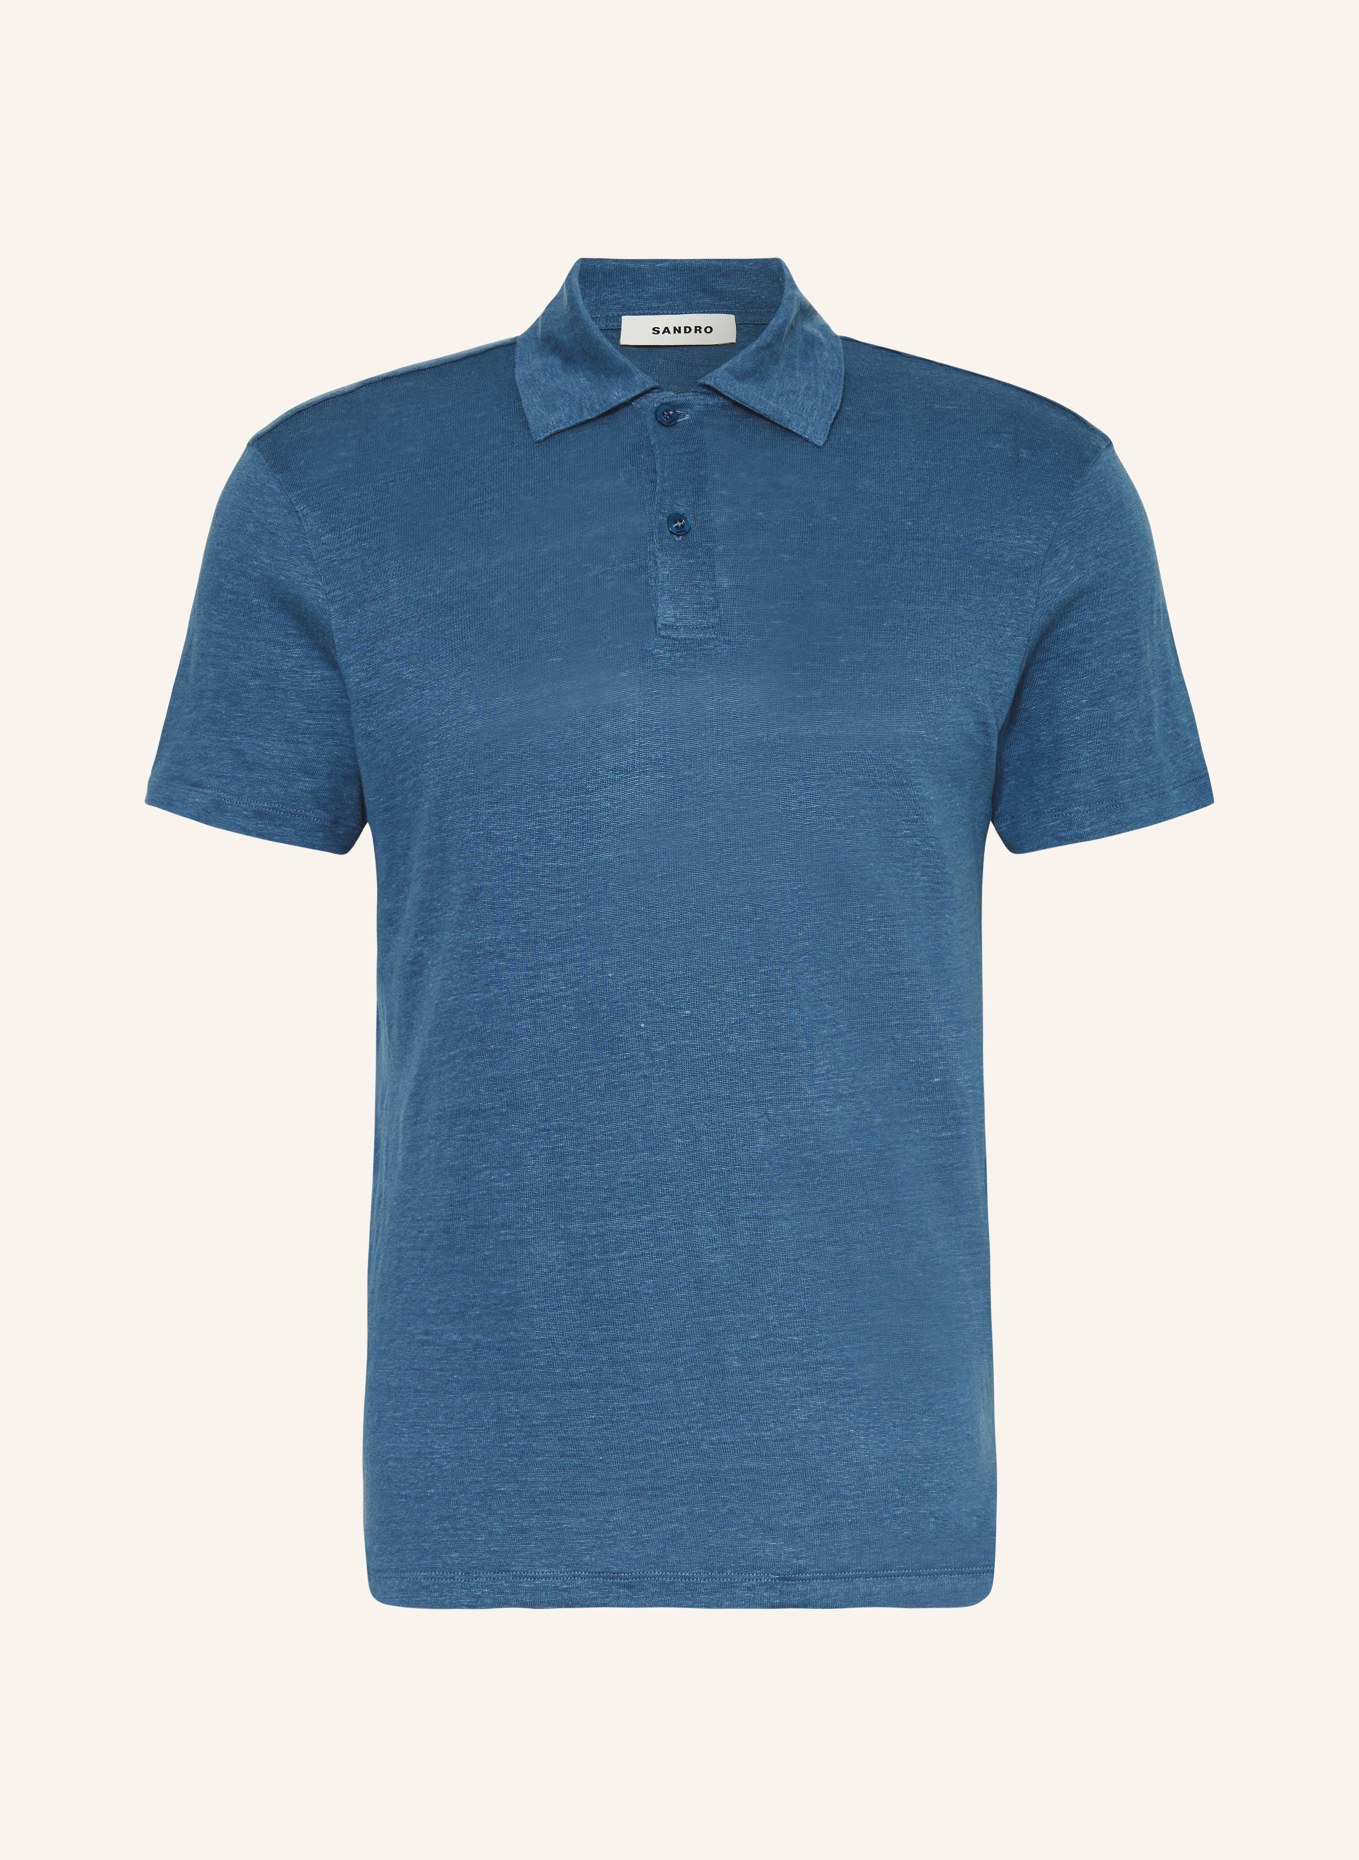 SANDRO Leinen-Poloshirt, Farbe: BLAU (Bild 1)